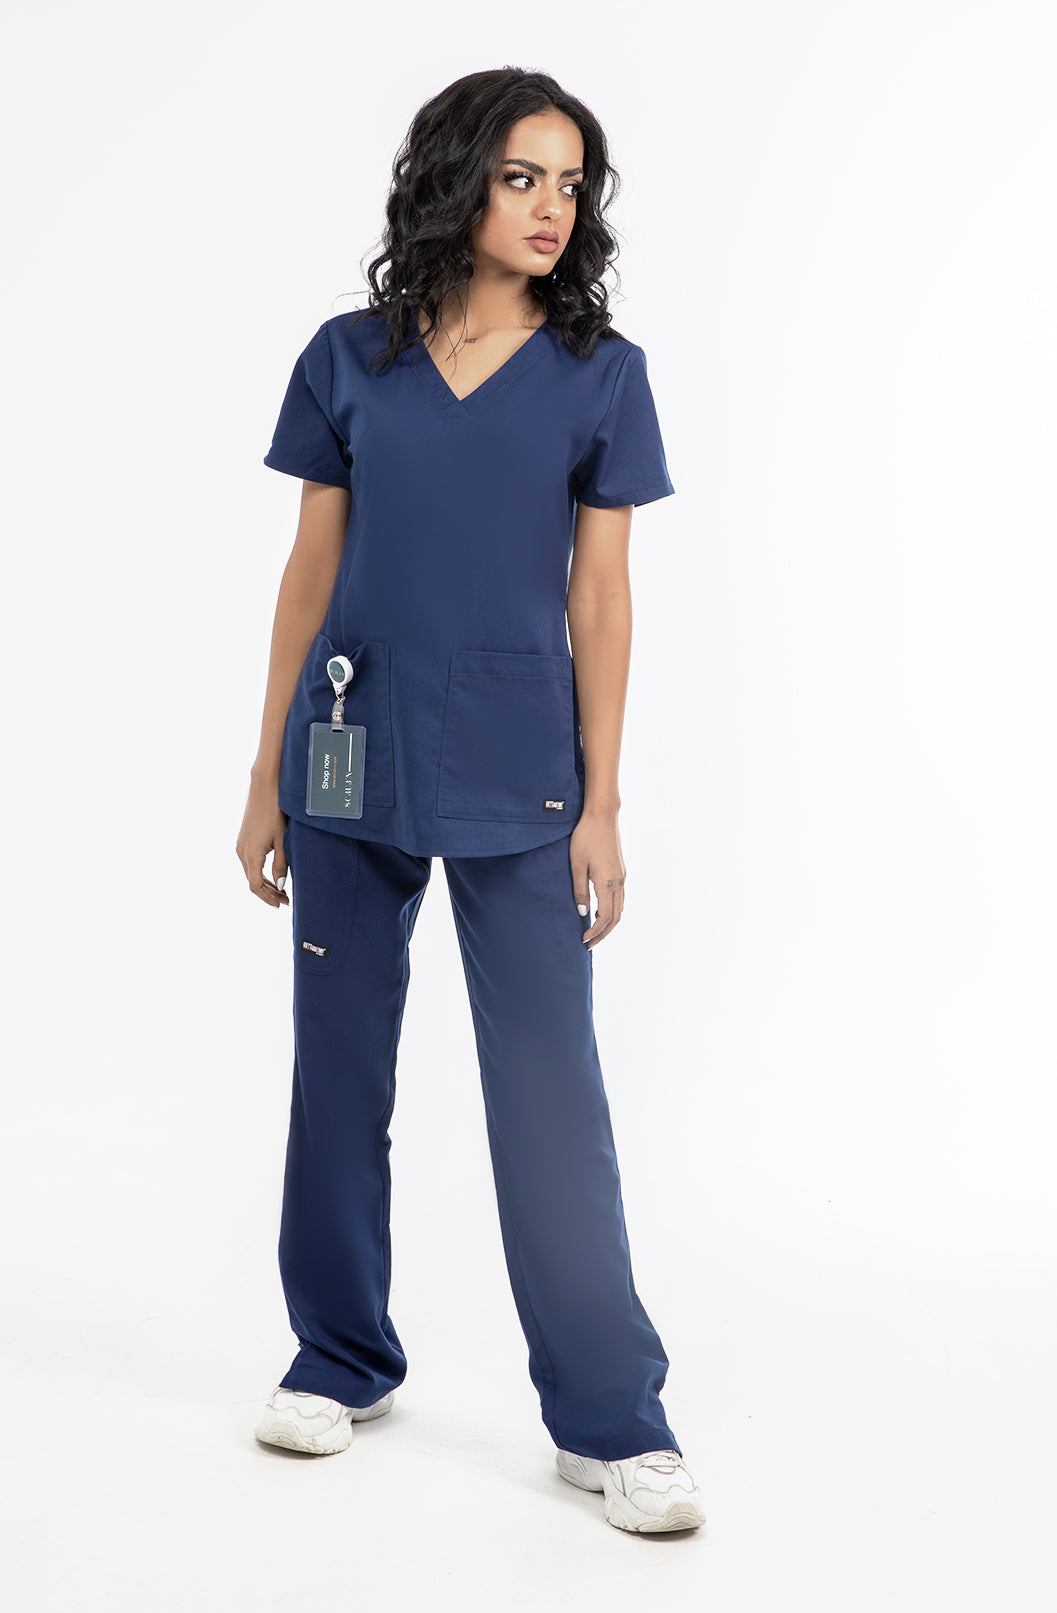 Grey's Anatomy V Women's Top 71166 – scrubn